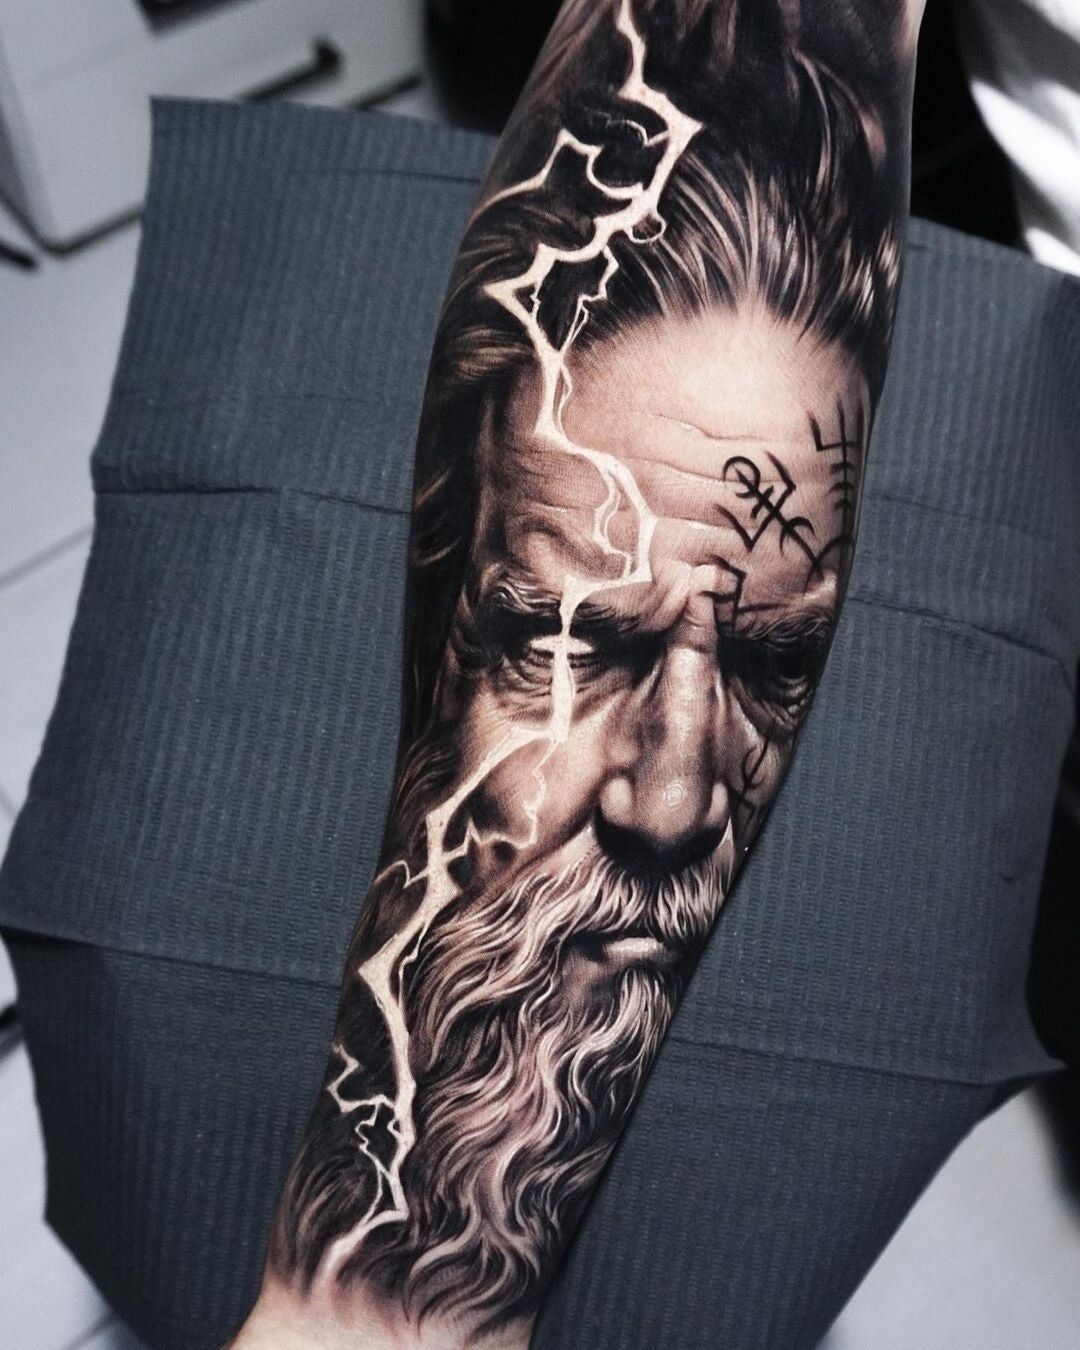 Tattoo artwork by © Samurai Standoff